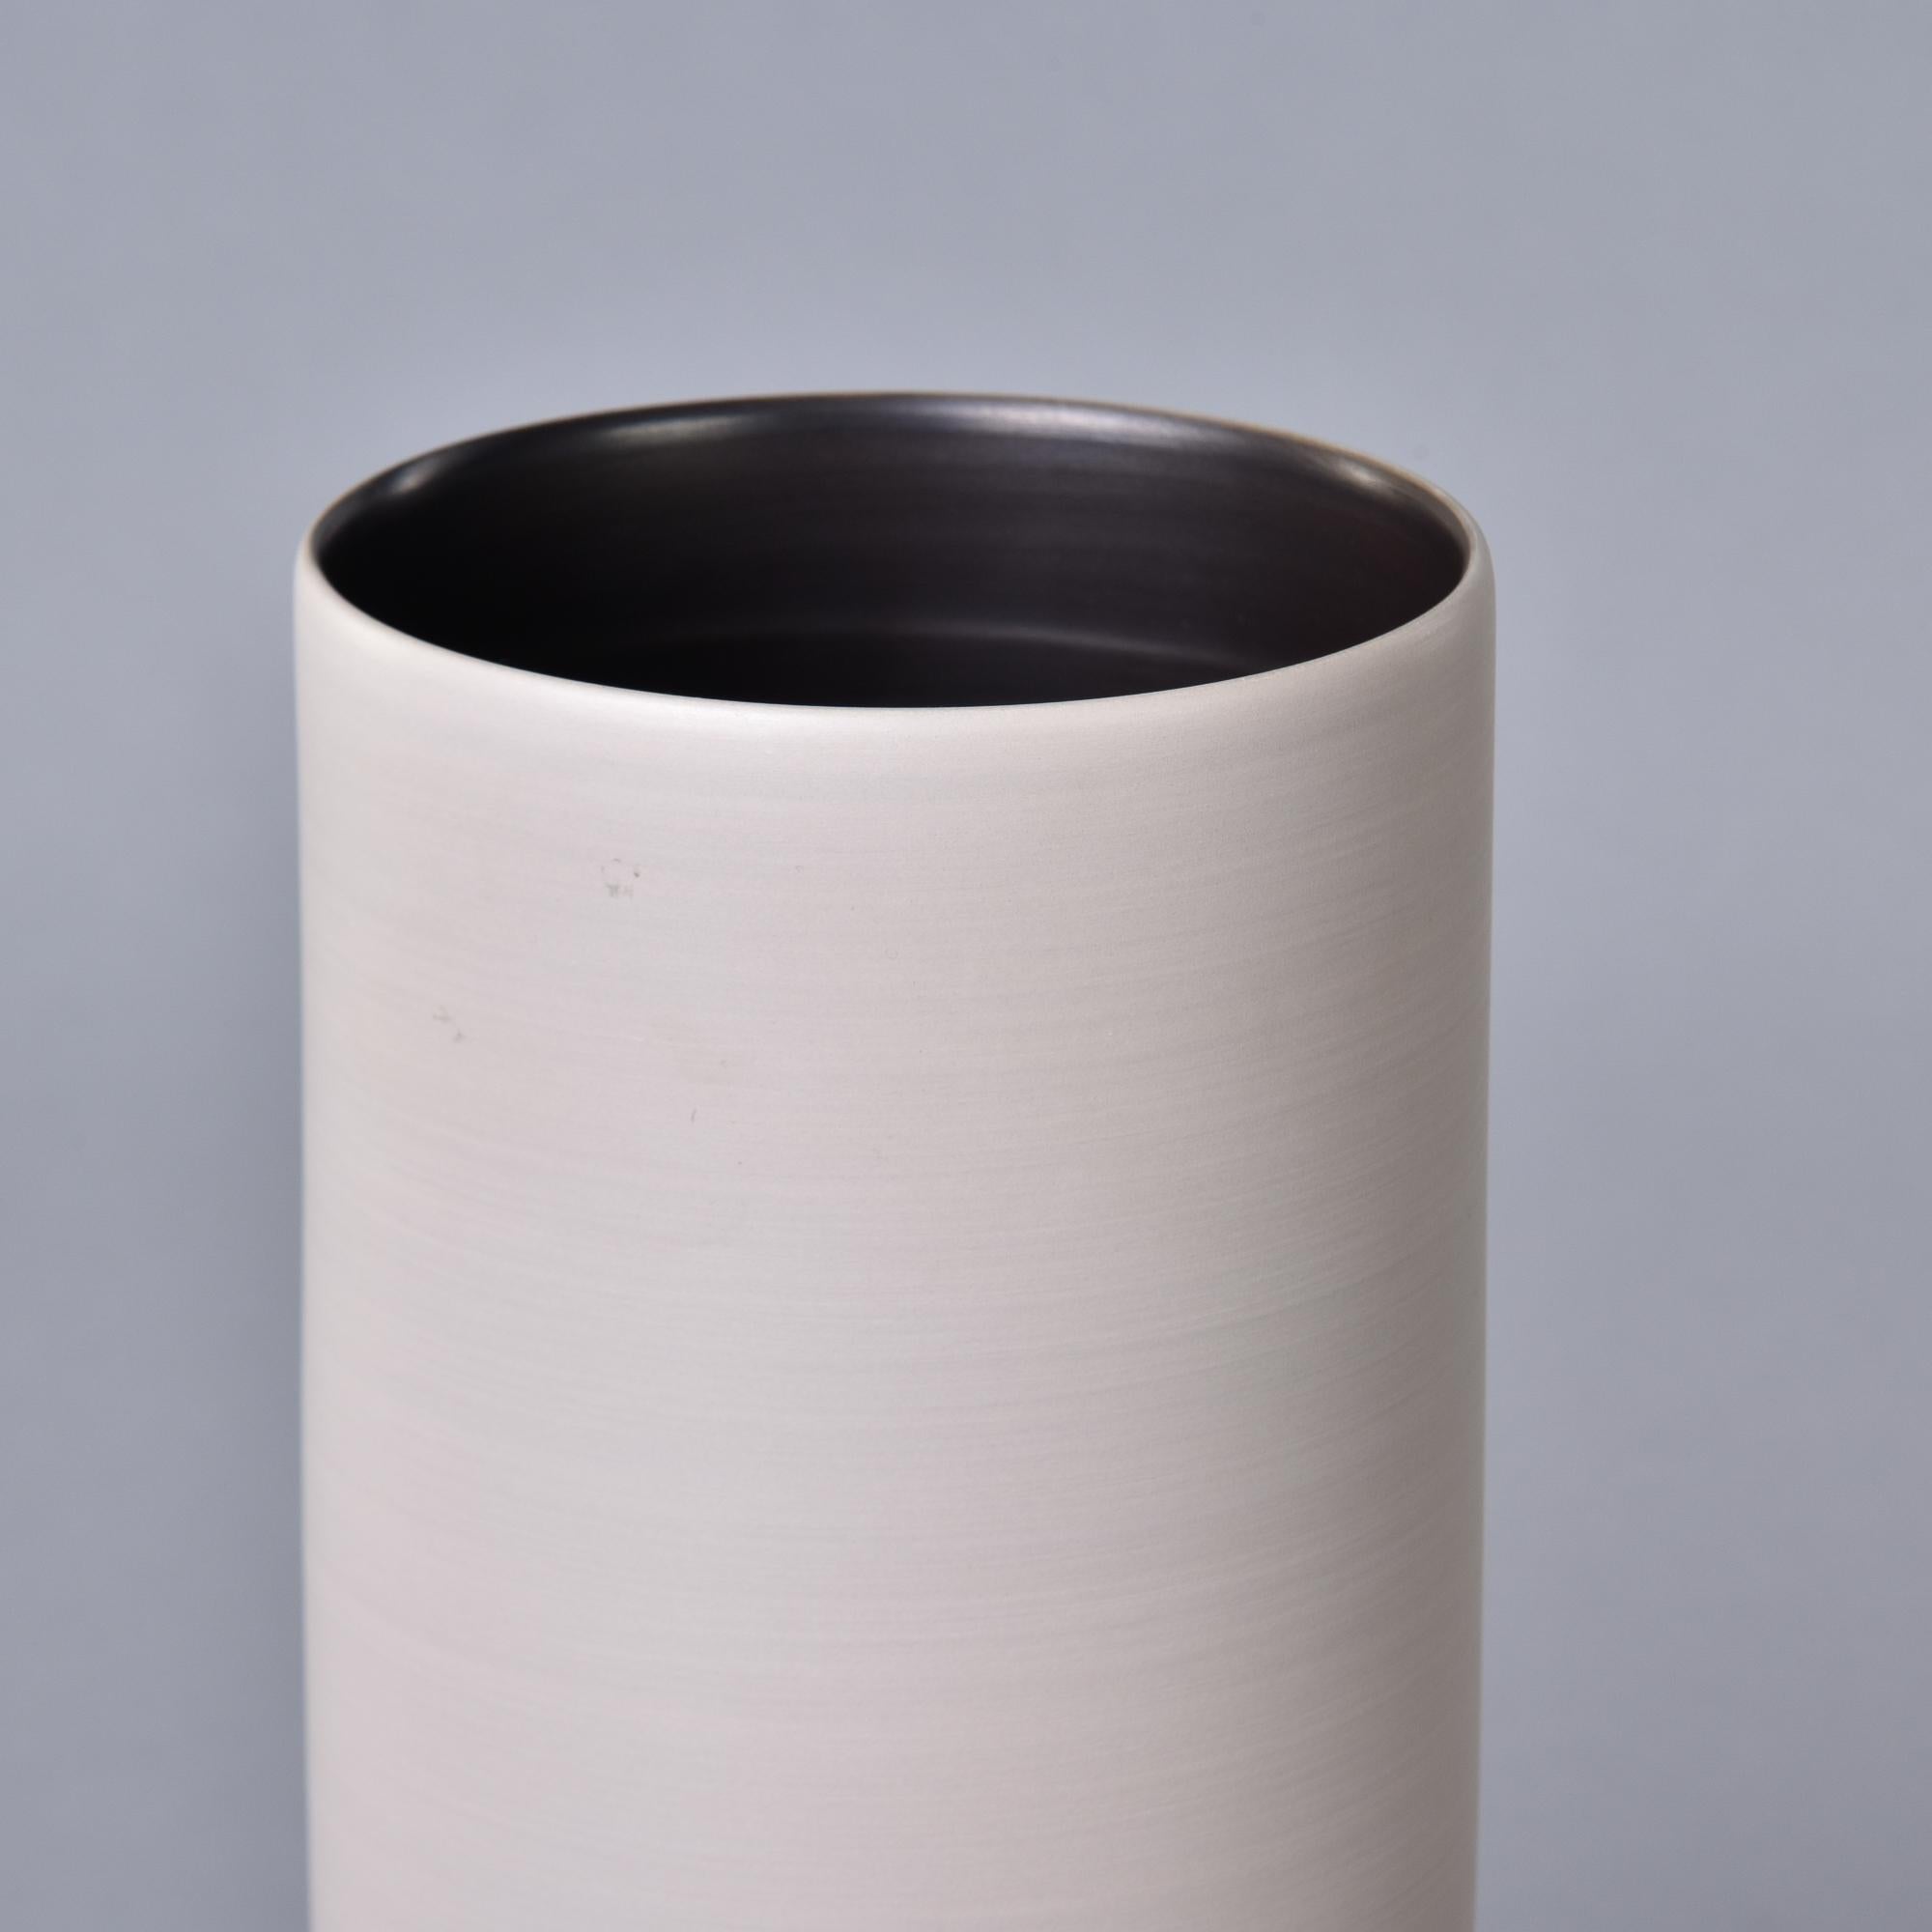 Porcelain Rina Menardi Shaded Greige Canna One Vase For Sale